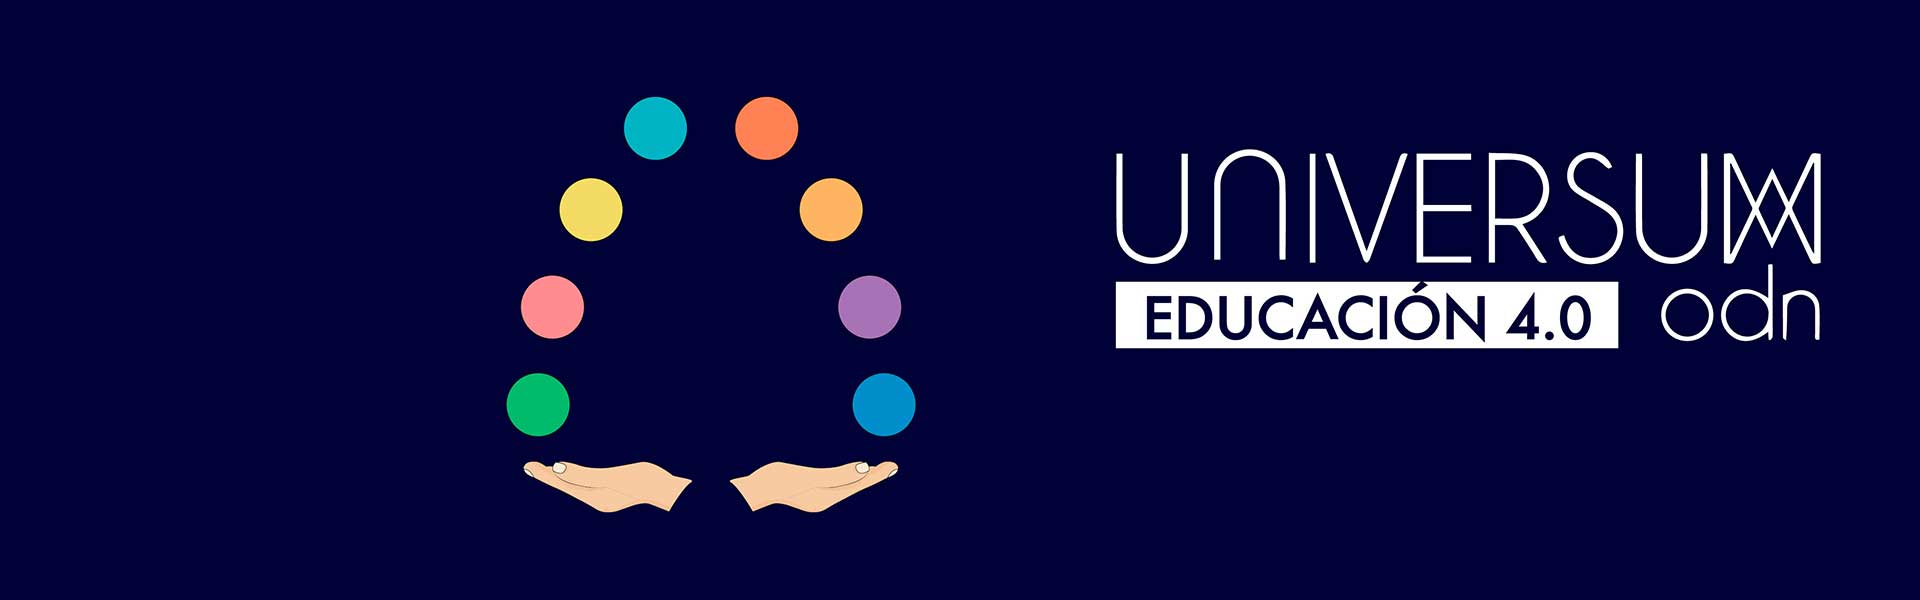 Banner-Universum-Educación-4